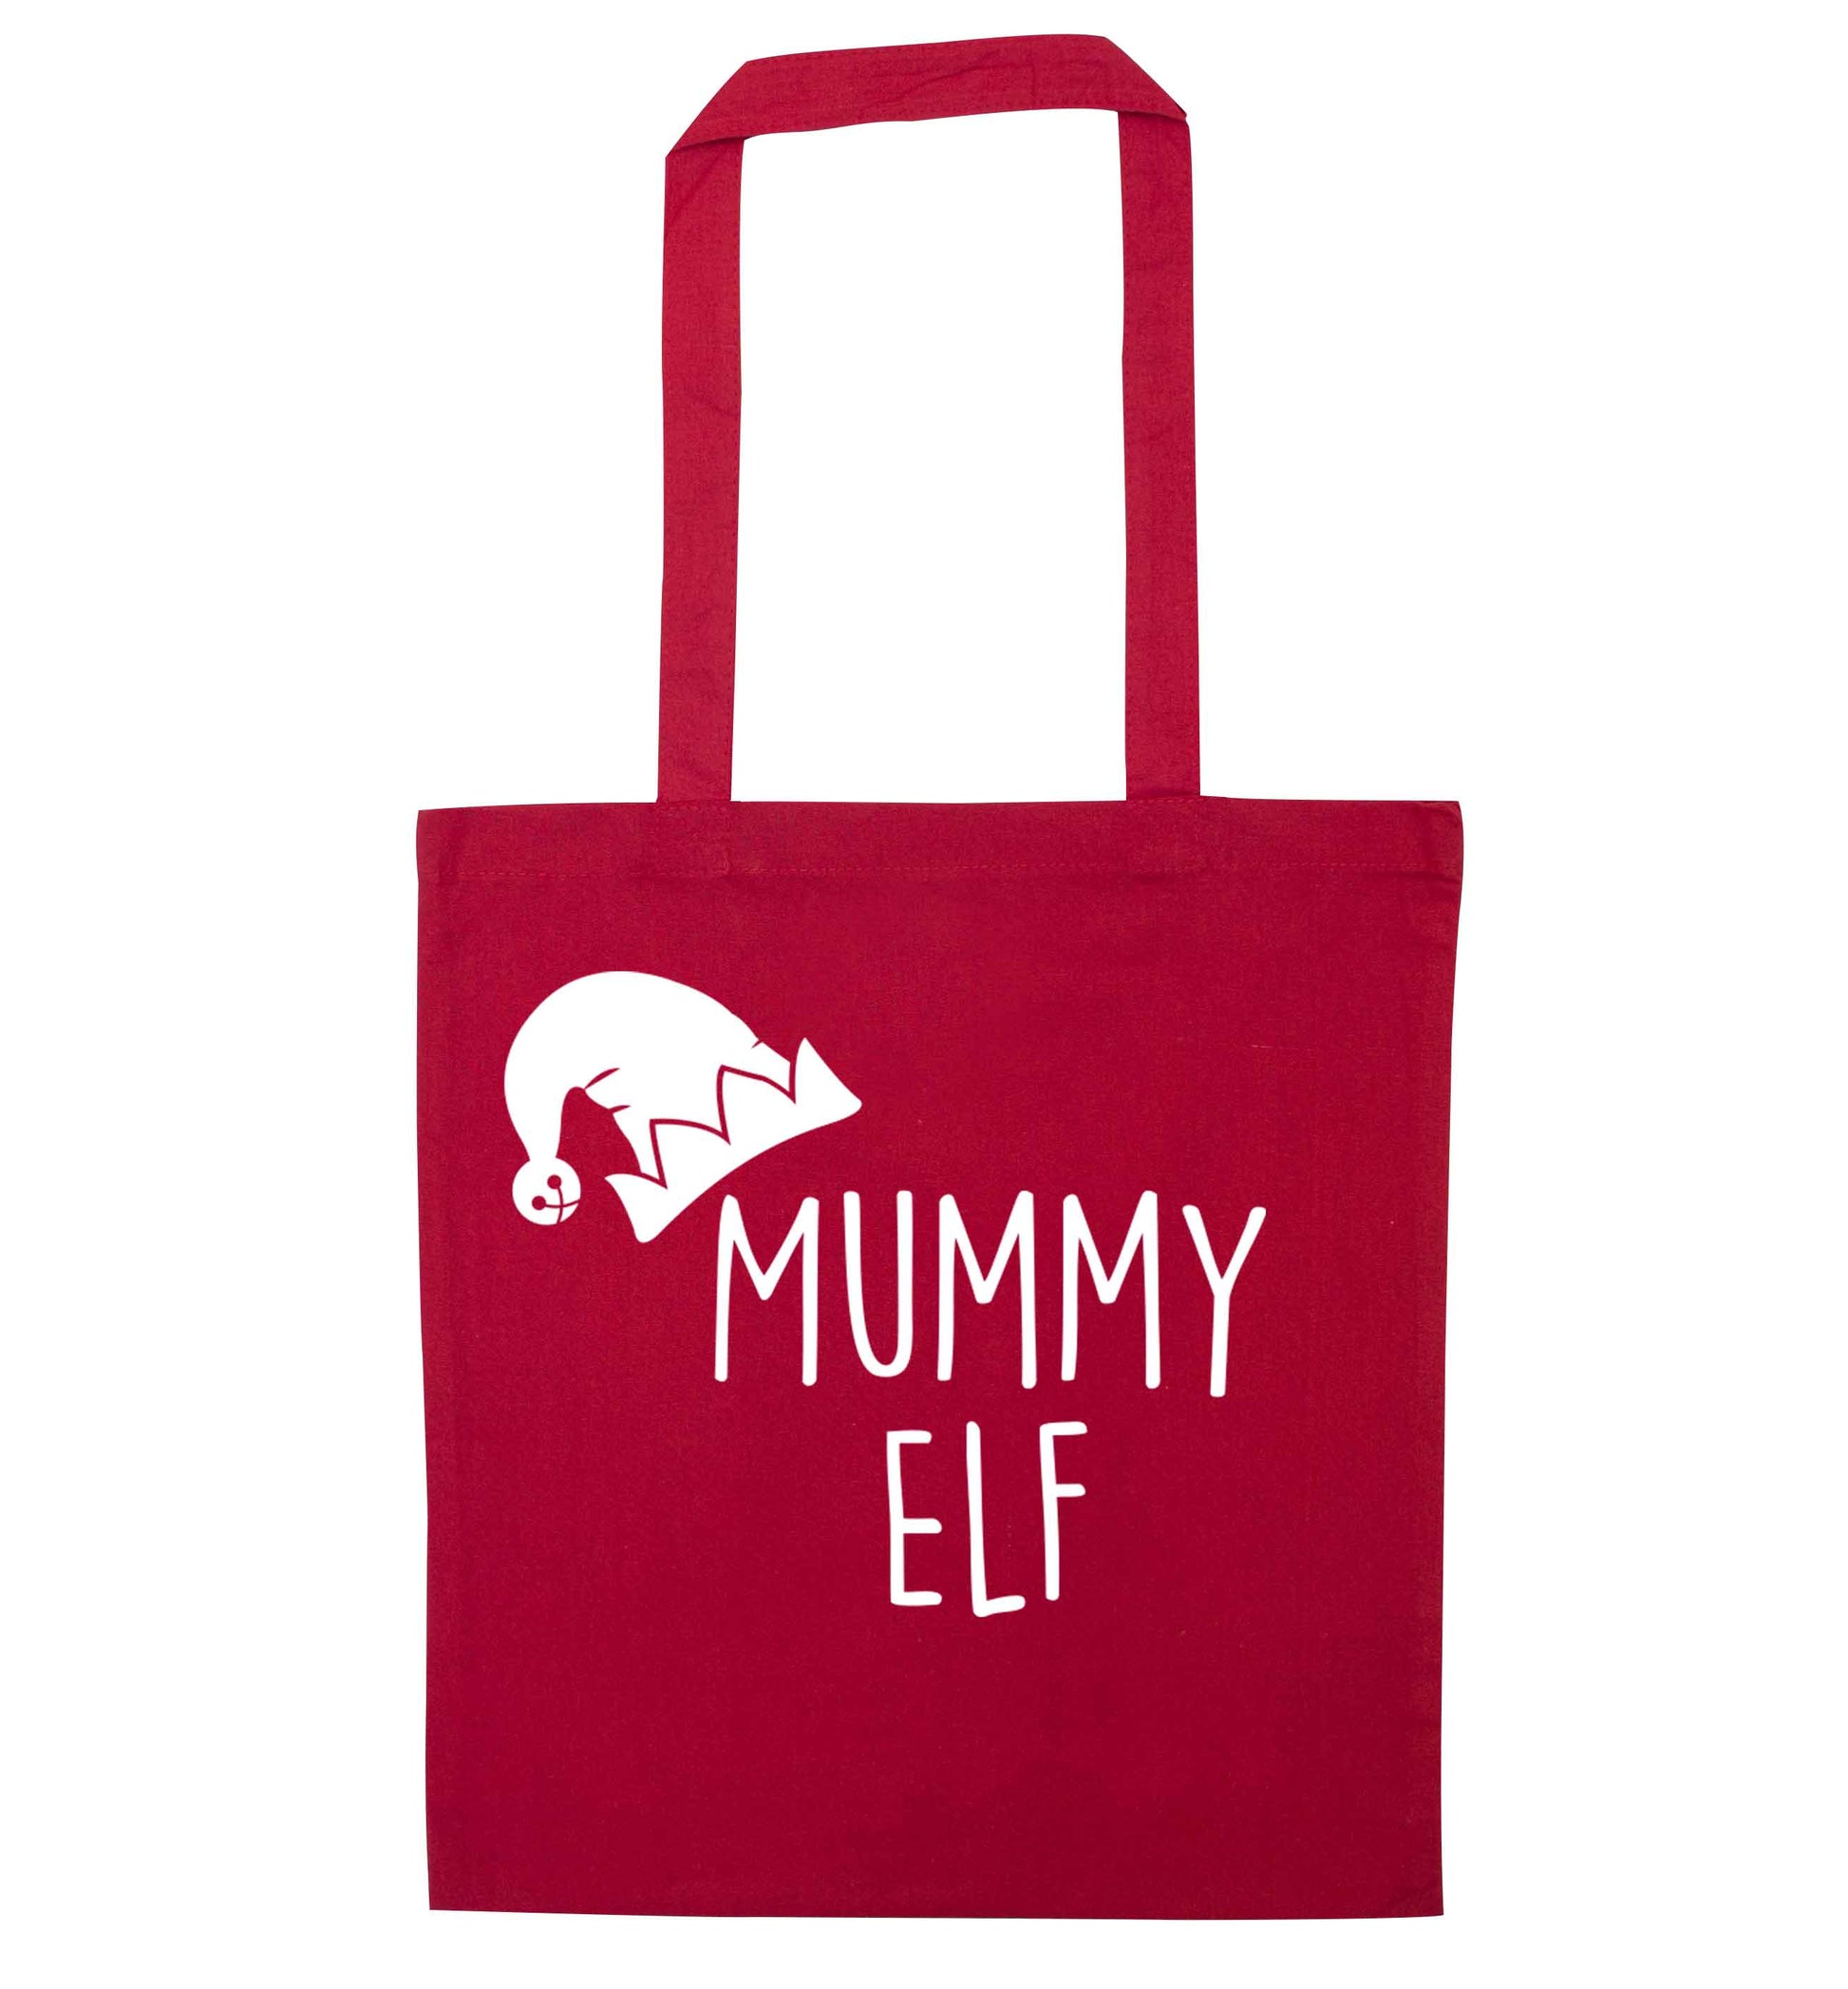 Mummy elf red tote bag